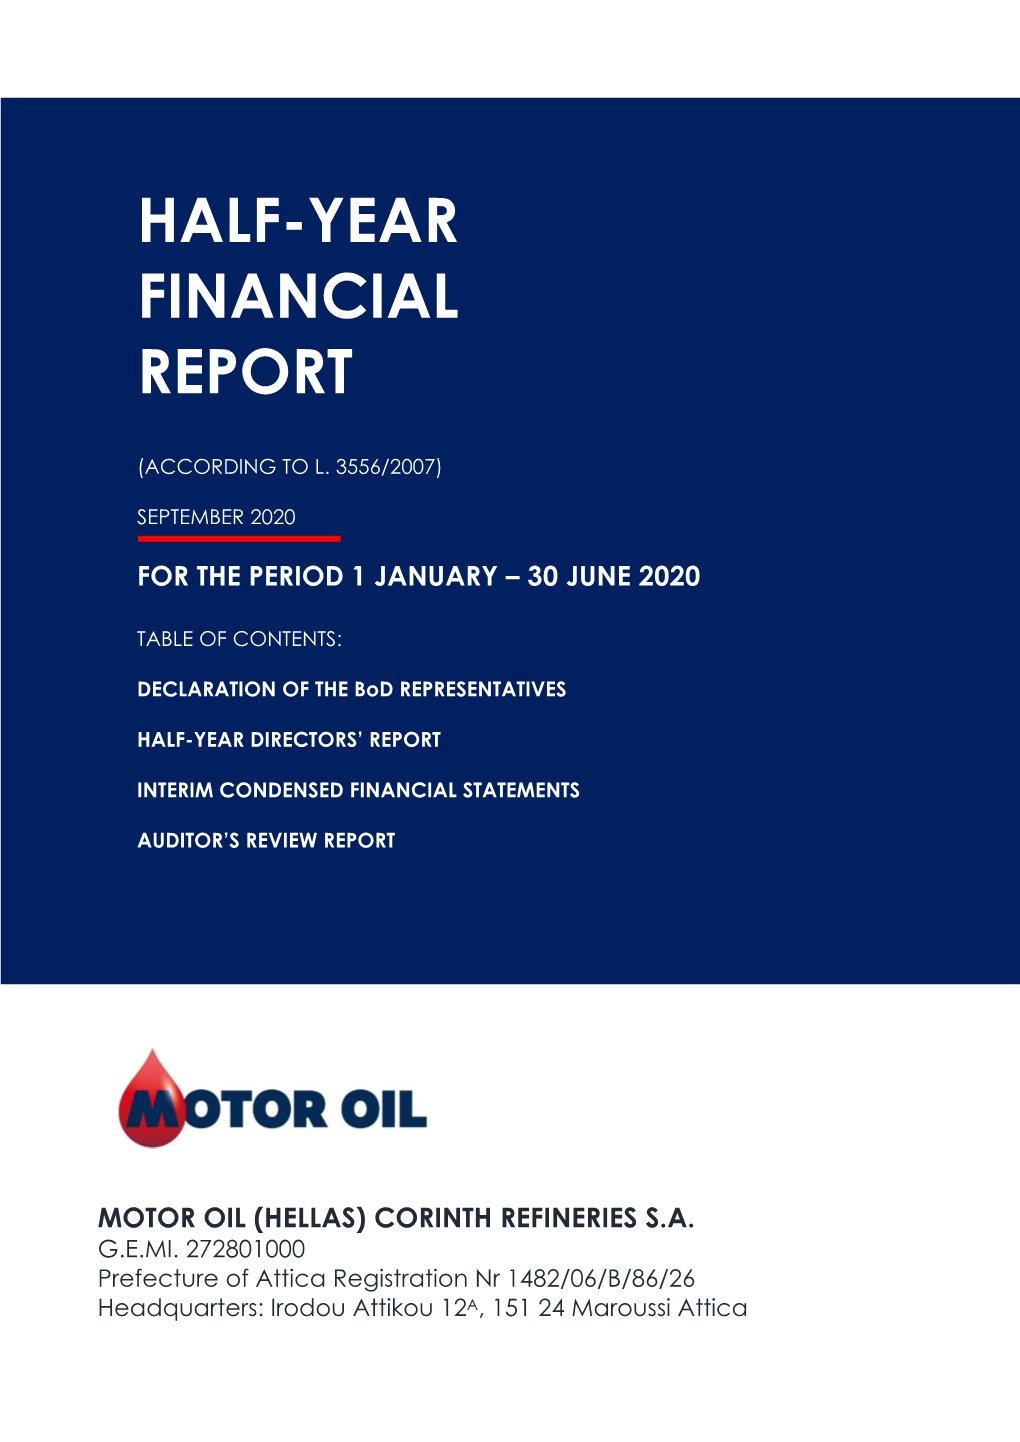 Half-Year Financial Report